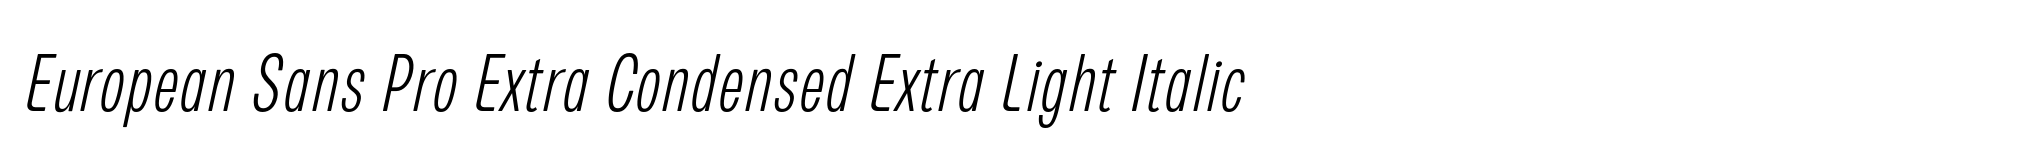 European Sans Pro Extra Condensed Extra Light Italic image